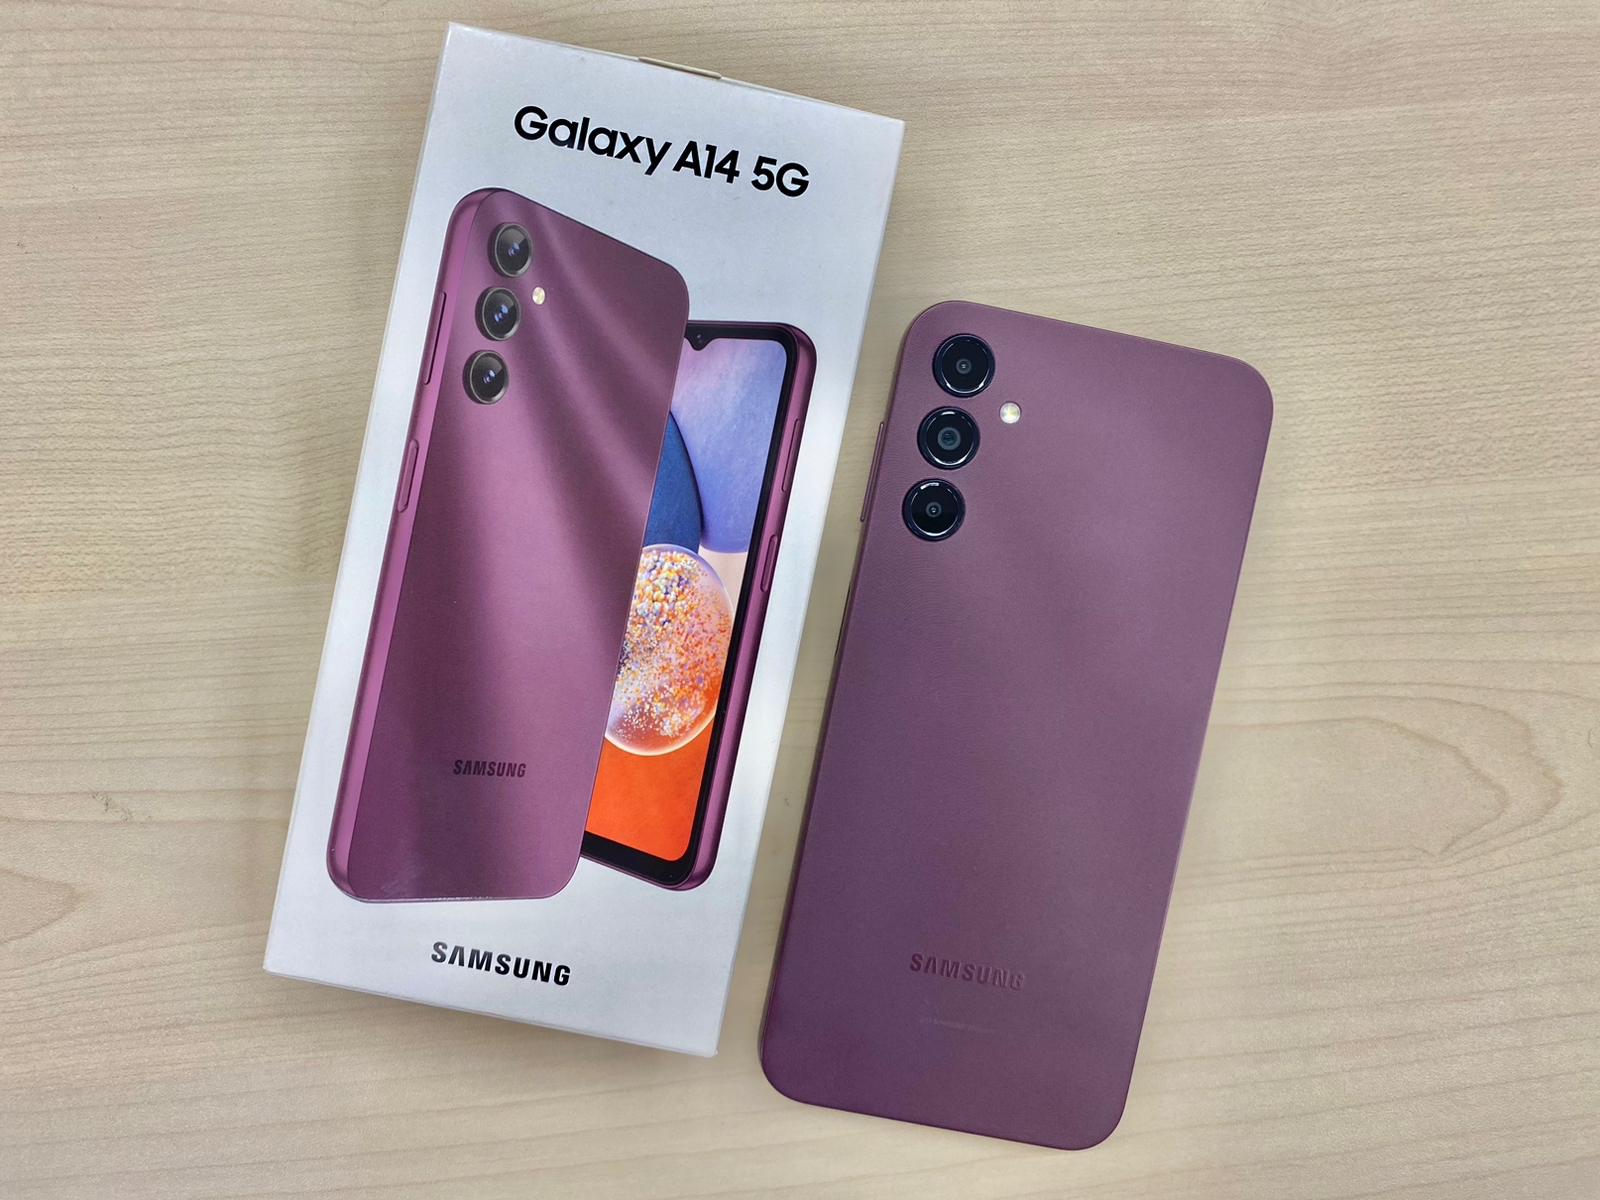 Samsung Rilis Galaxy A14 5G di Indonesia, Spek Gahar Harga Terjangkau